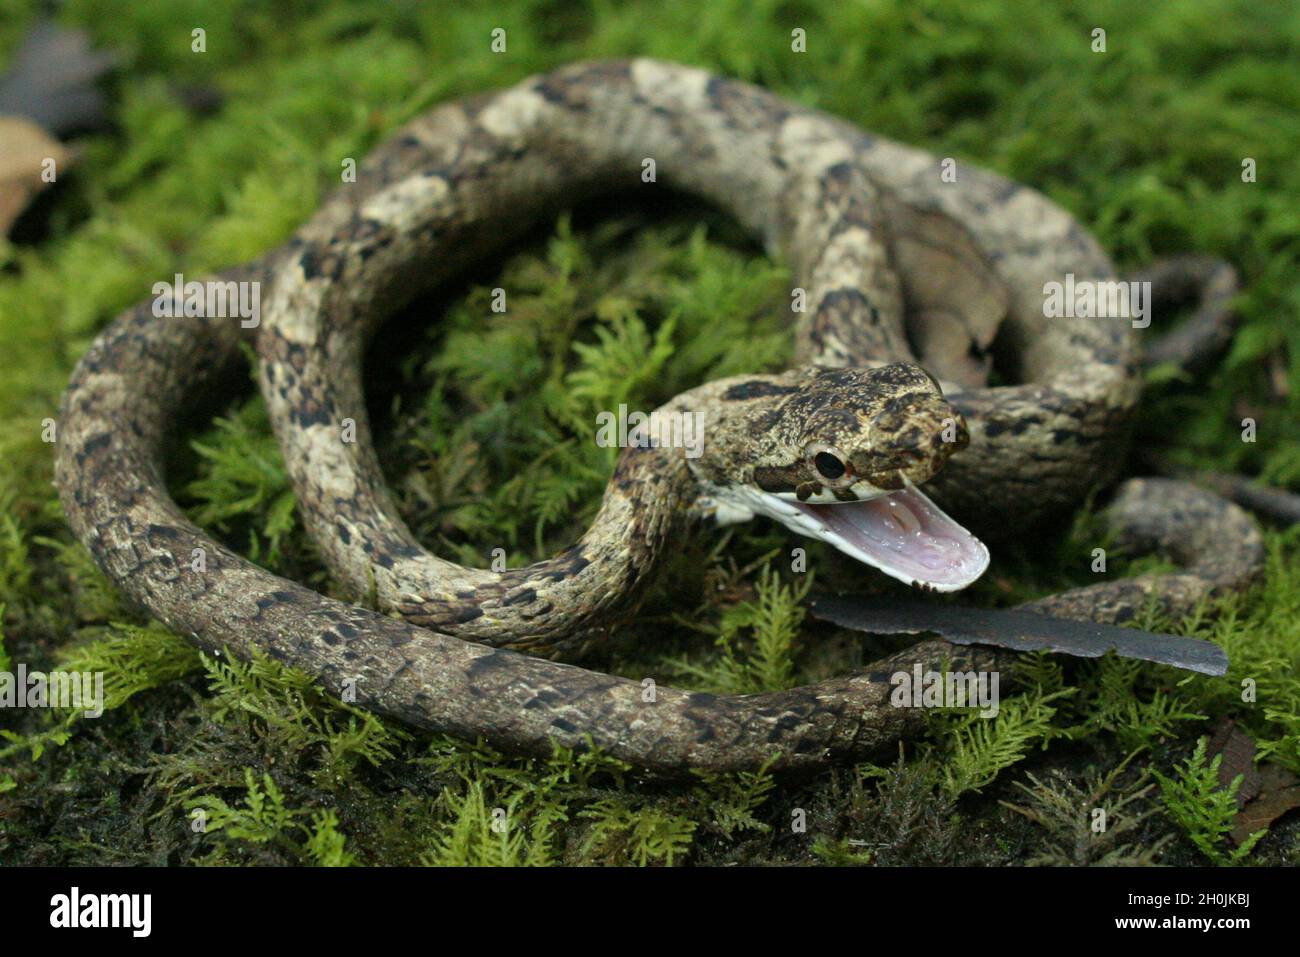 A non-poisonous snake. Forest San Matías-San Carlos. Oxapampa, Pasco, Perú. August 2008. Stock Photo